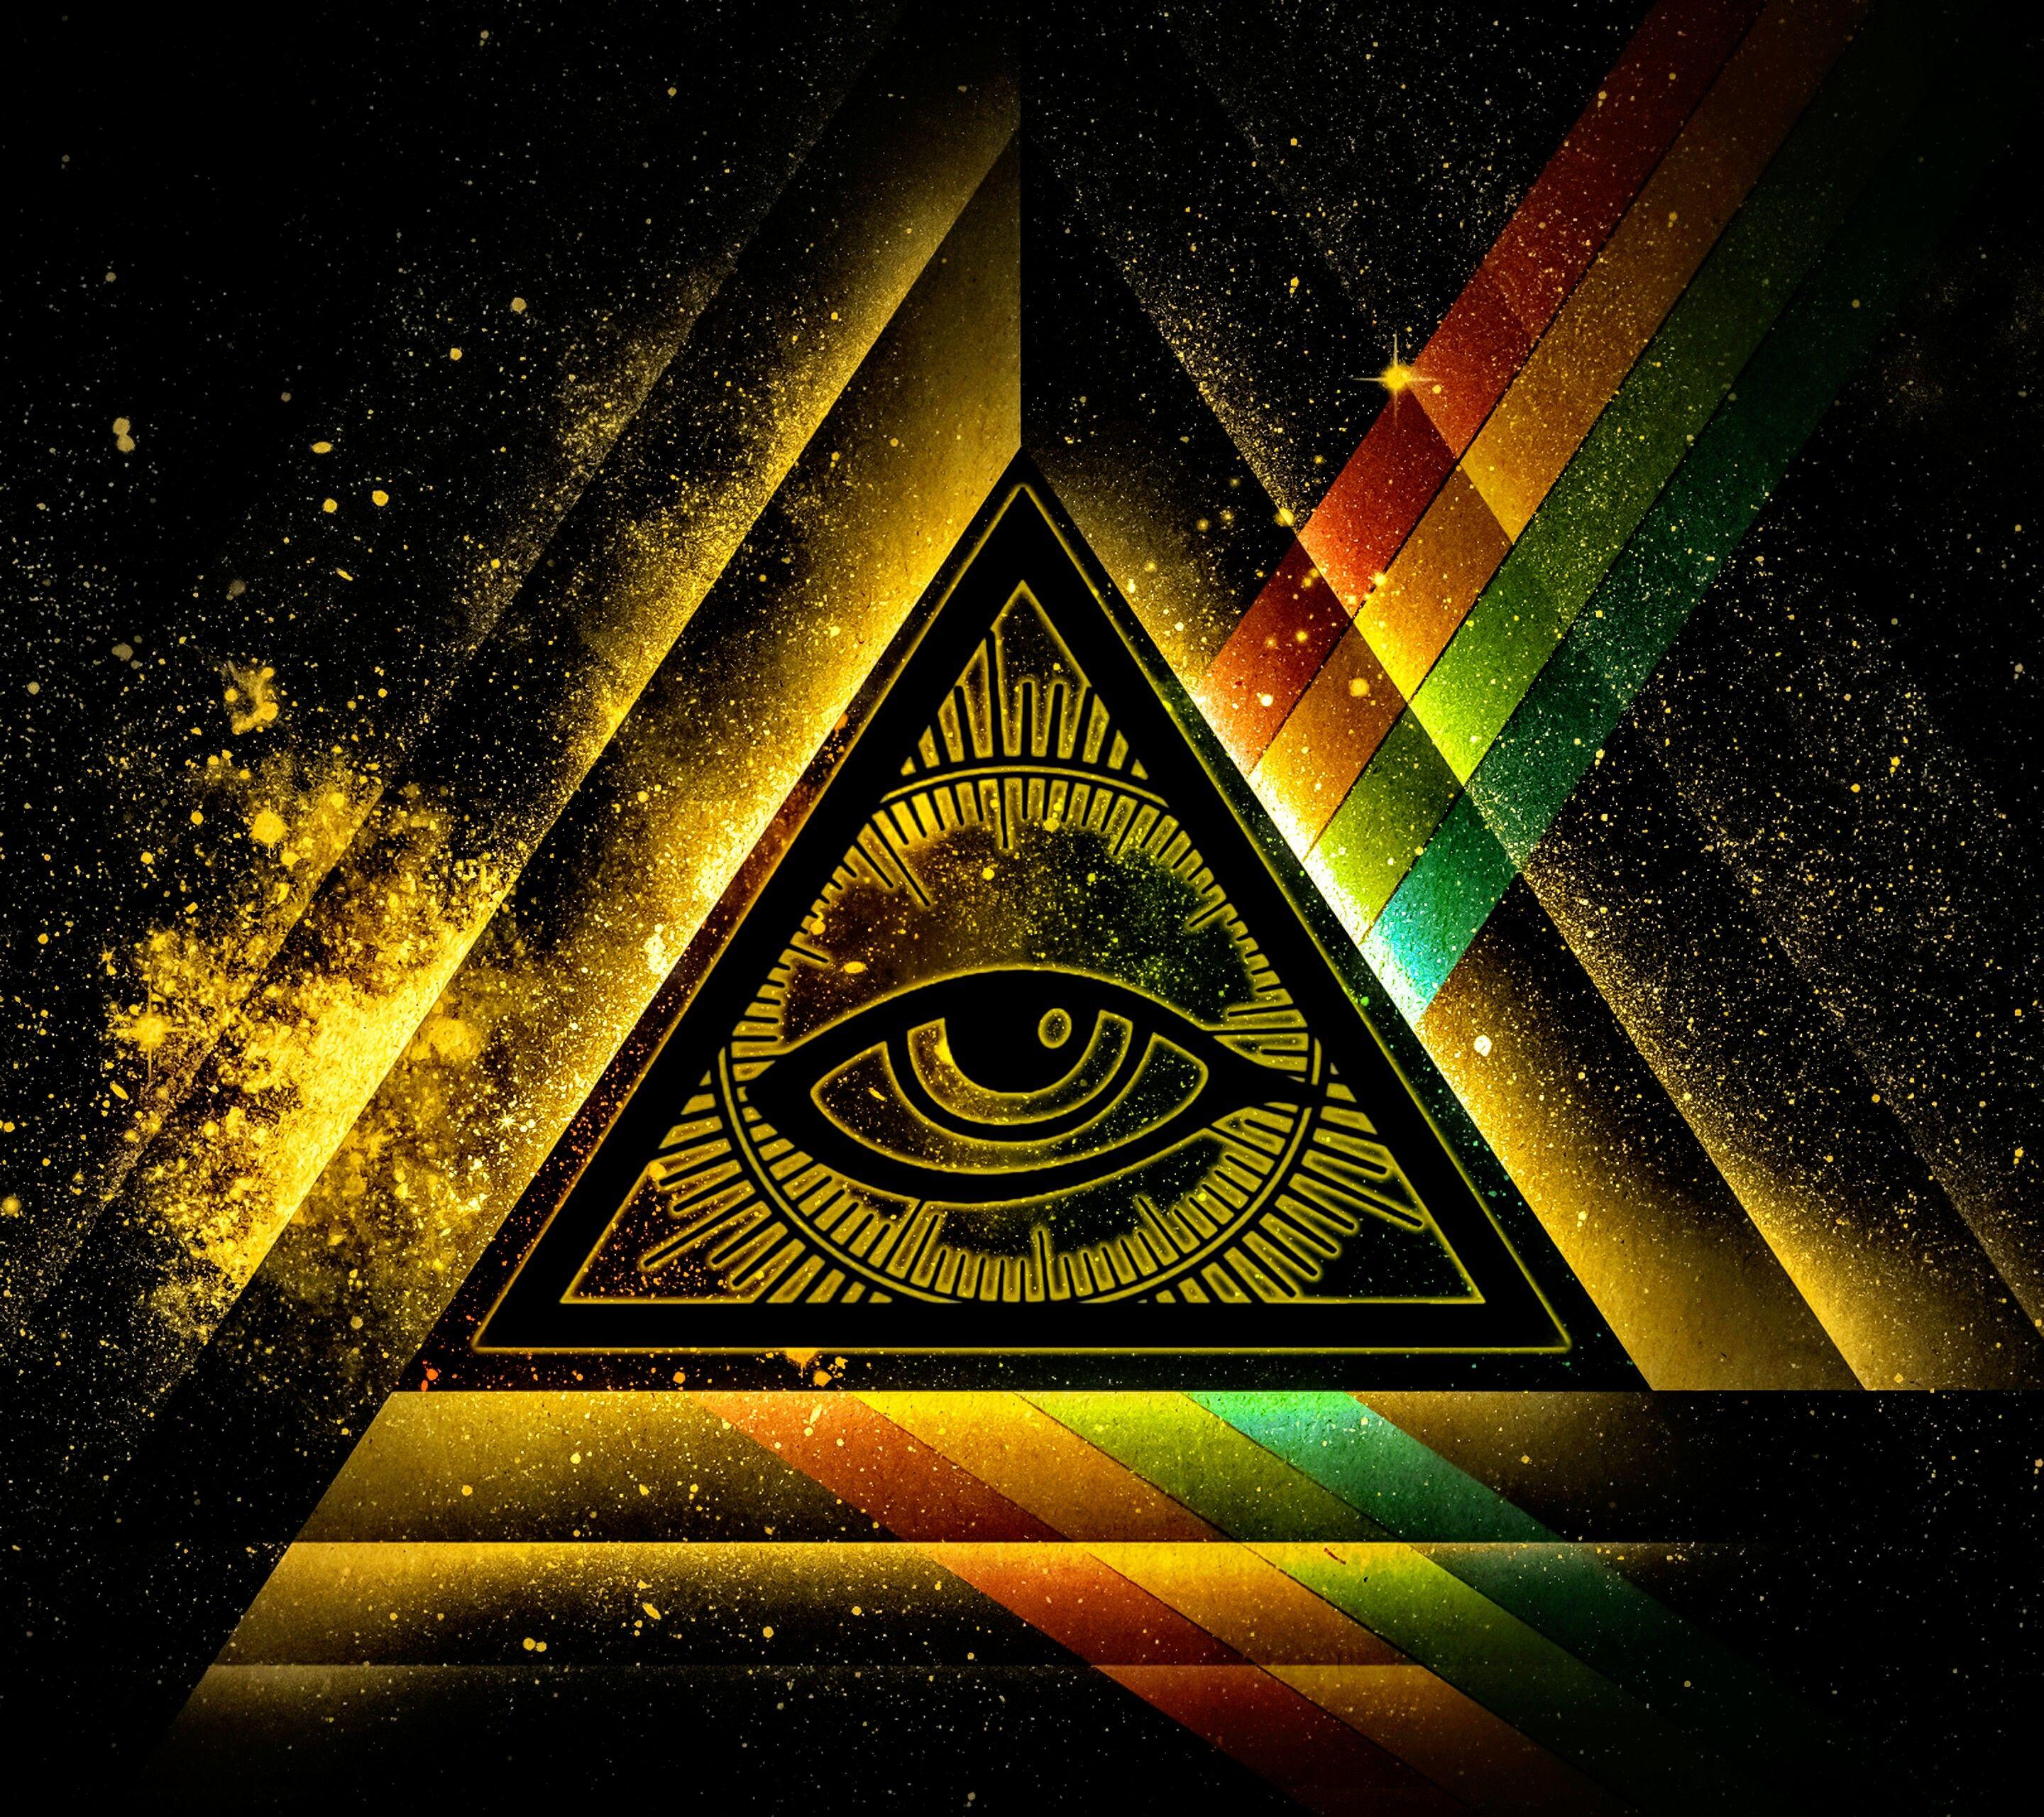 Cool Illuminati Wallpapers - Top Free Cool Illuminati ...
